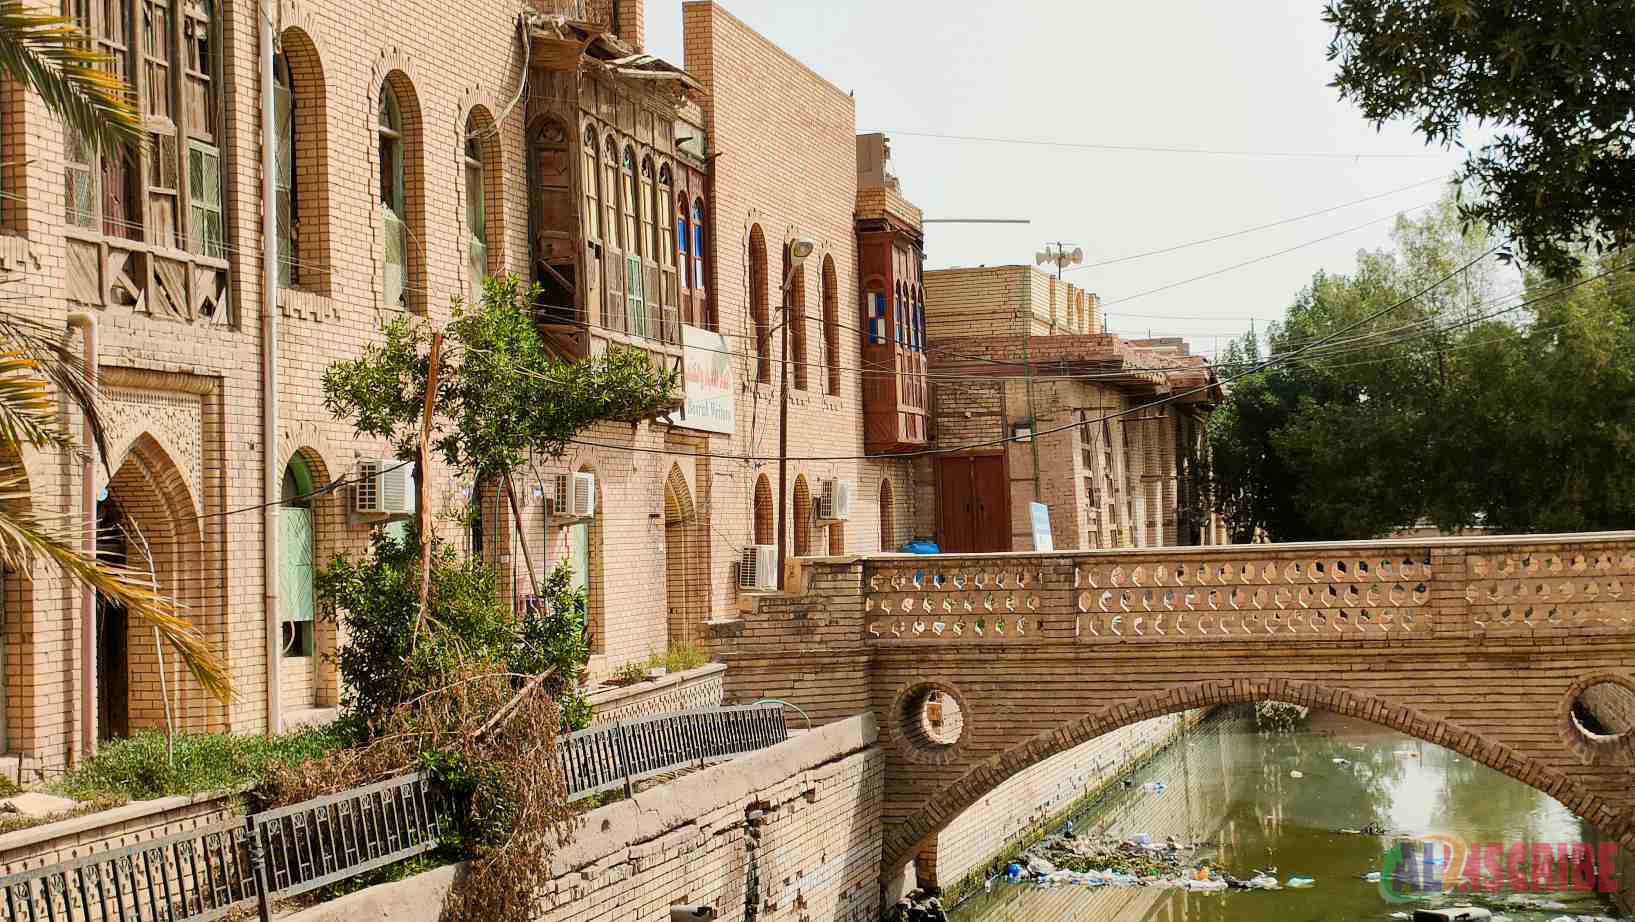 Basrah, Iraq